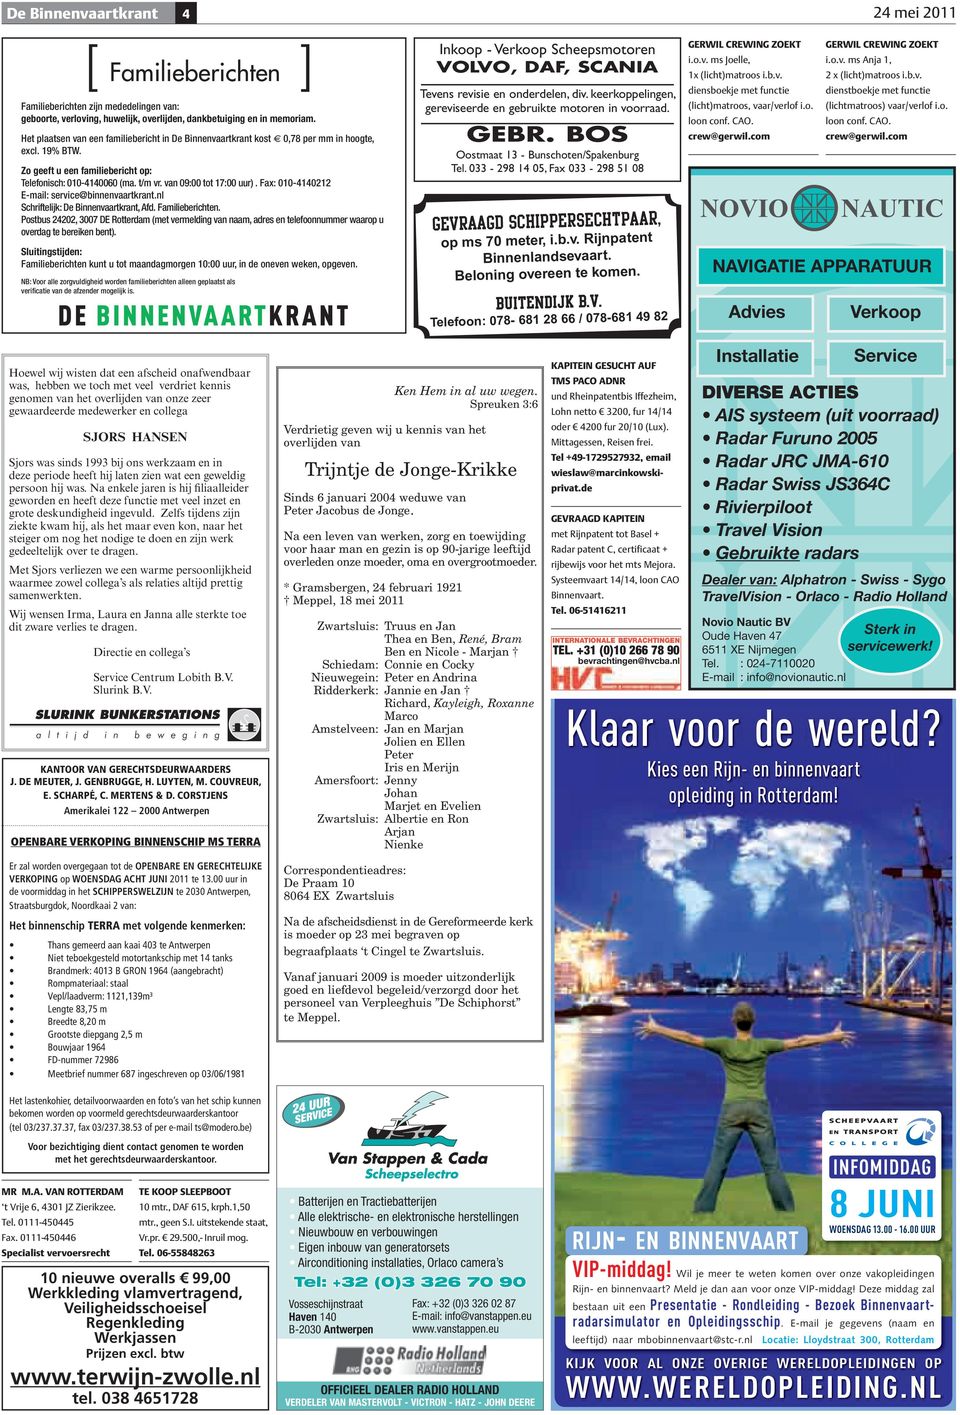 Fax: 010-4140212 E-mail: service@binnenvaartkrant.nl Schriftelijk: De Binnenvaartkrant, Afd. Familieberichten.